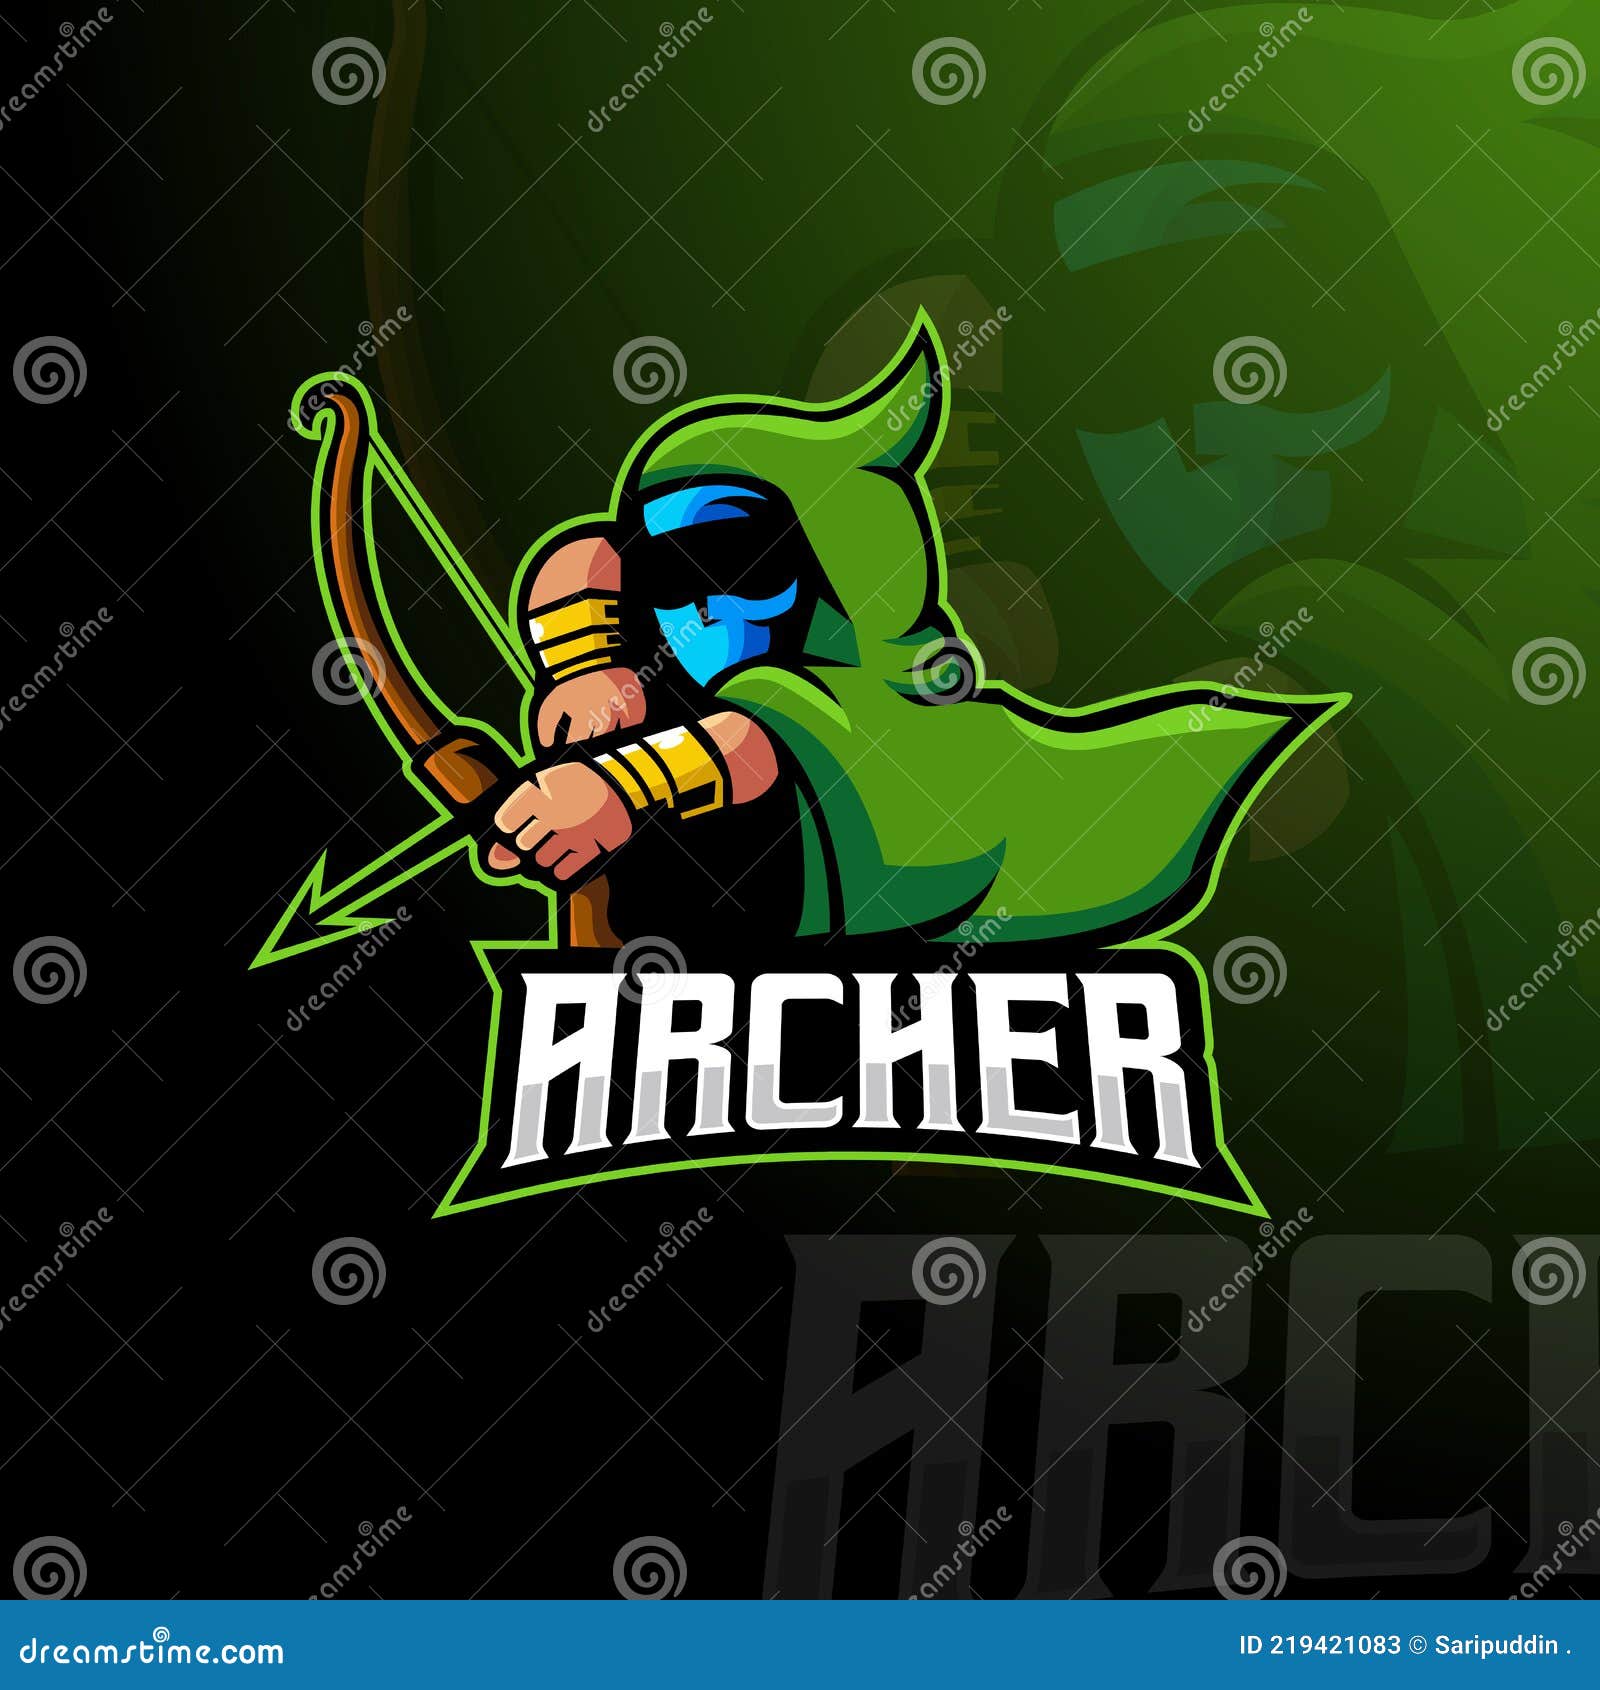 Archer esport logo stock vector. Illustration of emblem - 219421083